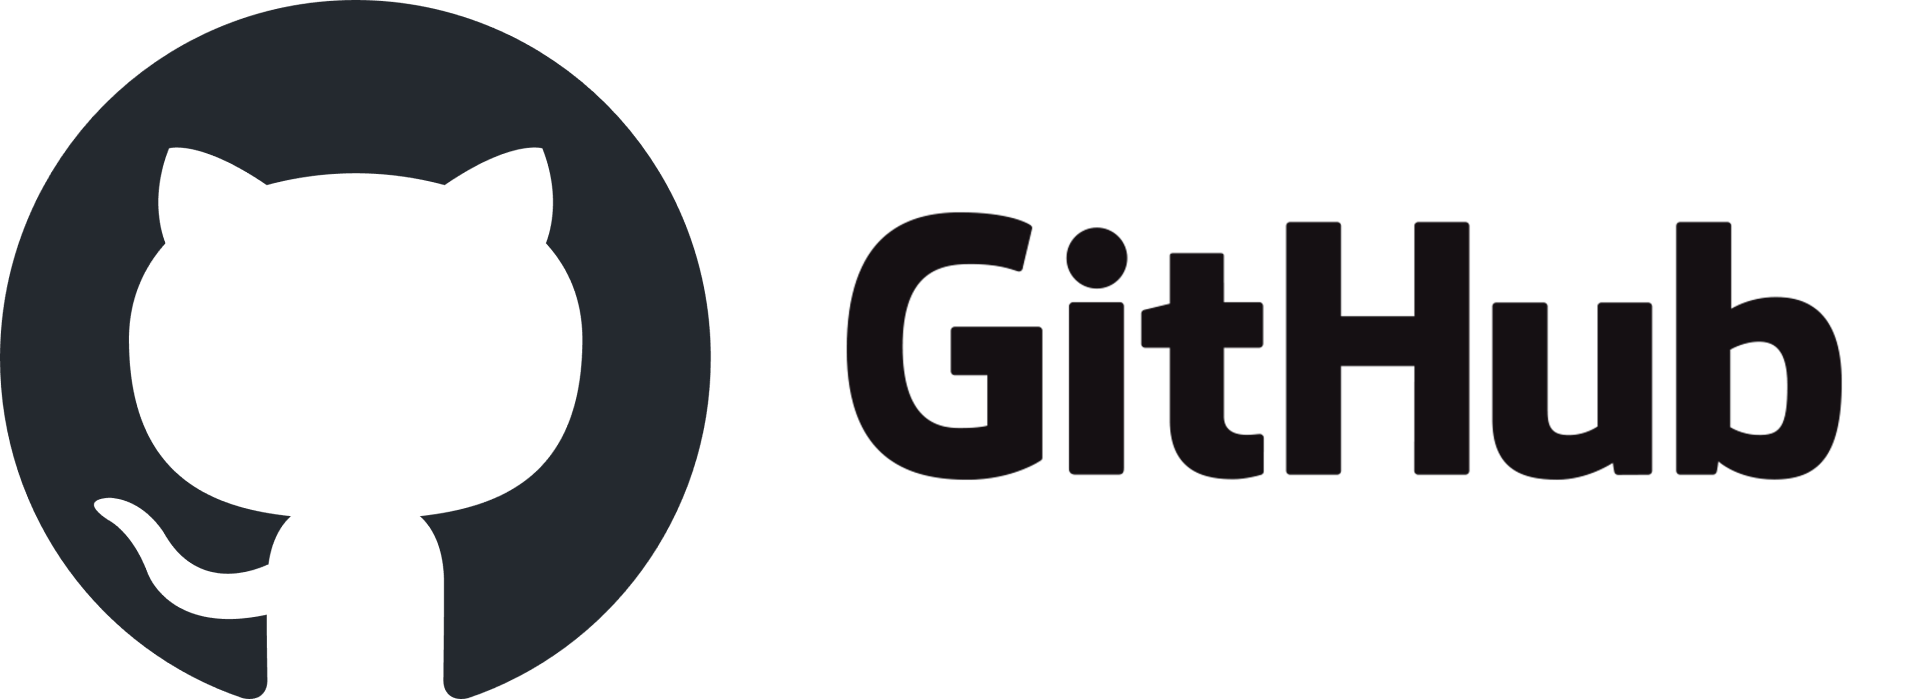 GitHub製品サンプル